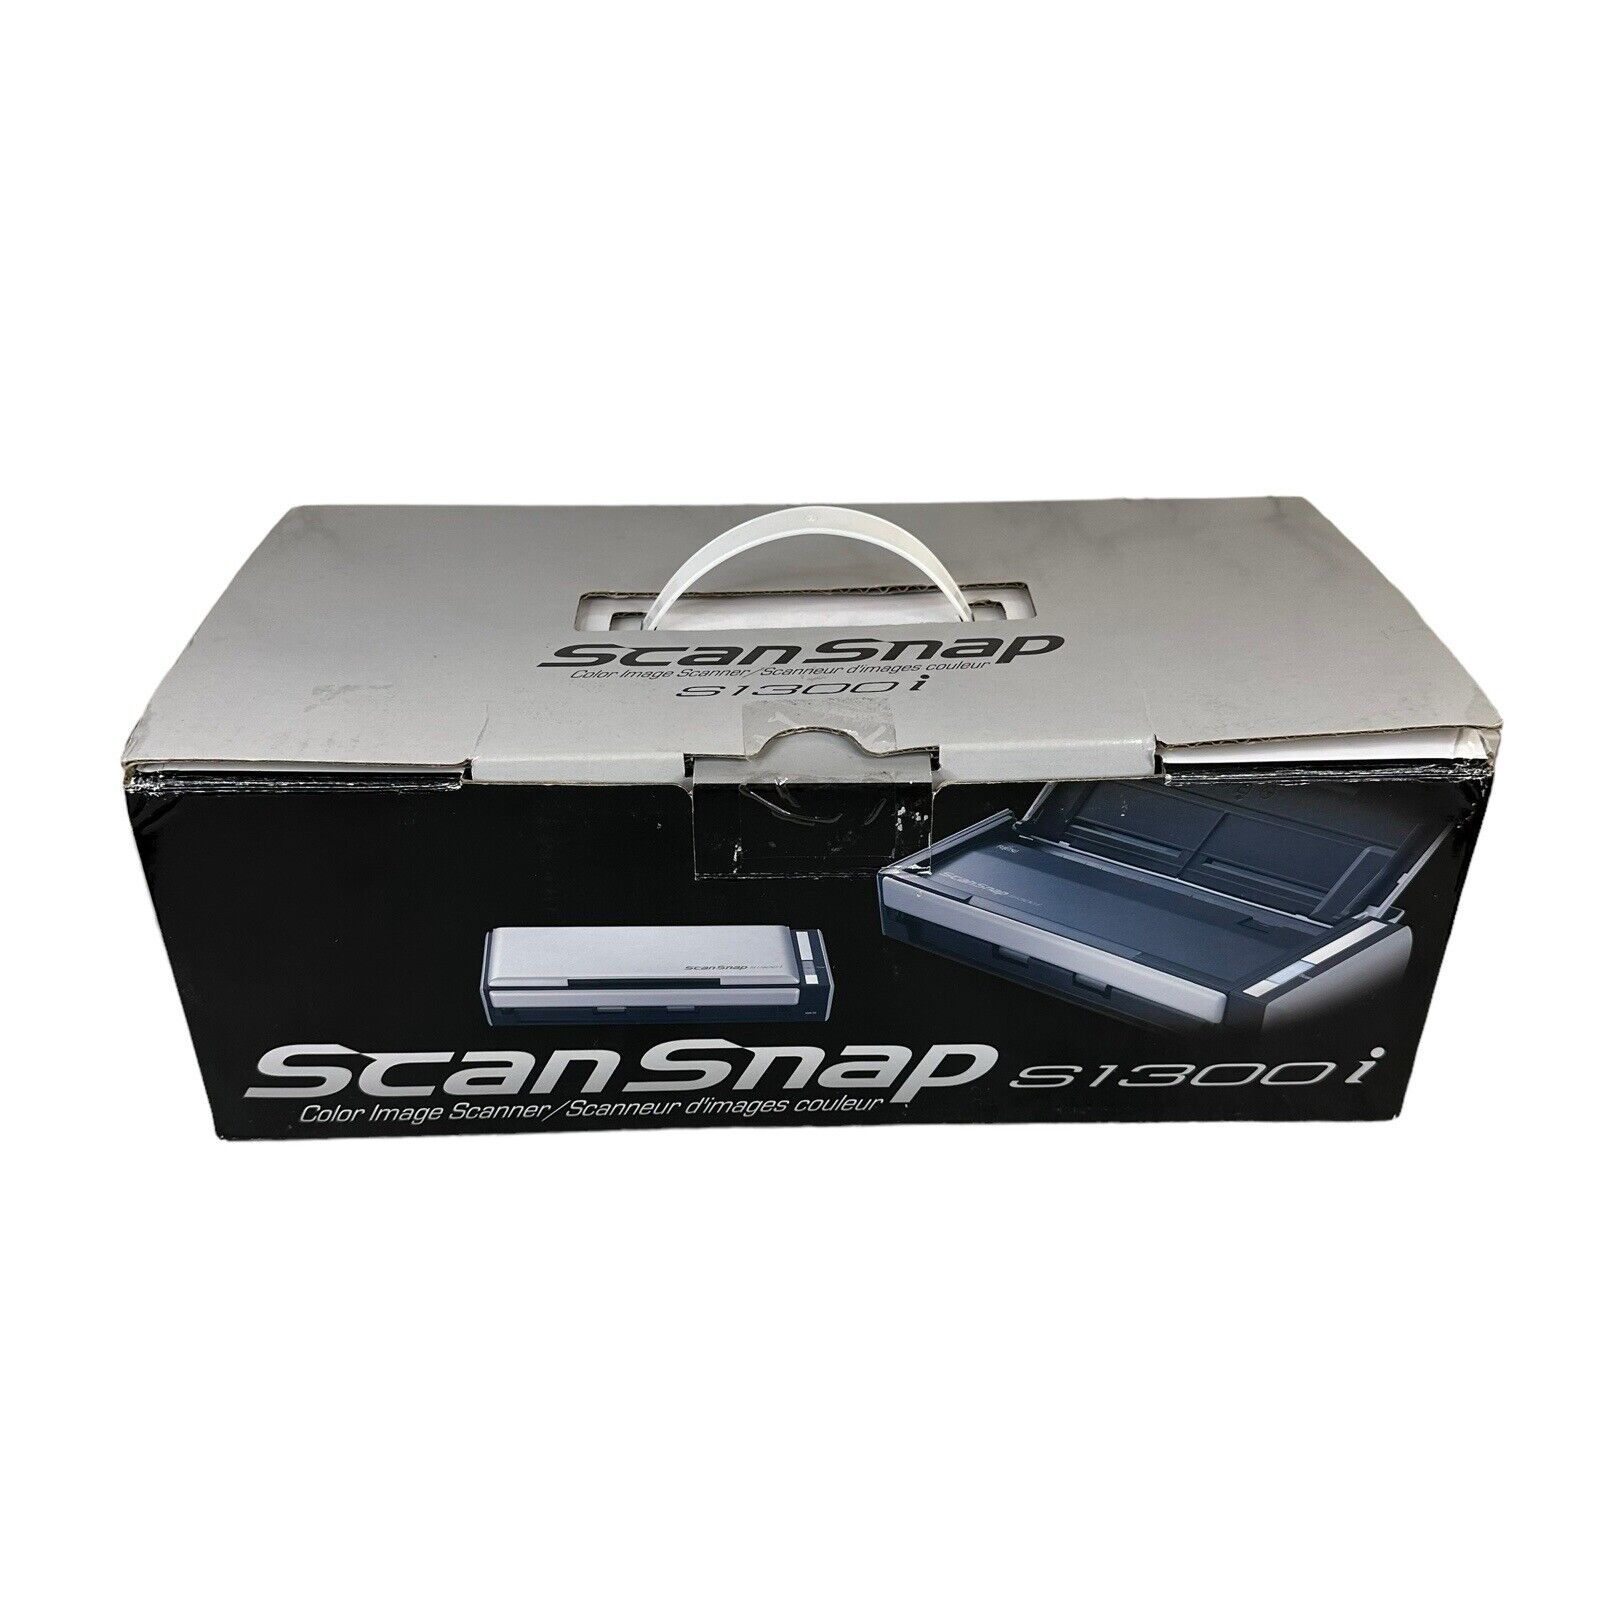 🔥 Fujitsu S1300i ScanSnap Document Scanner Open Box Brand New 🔥